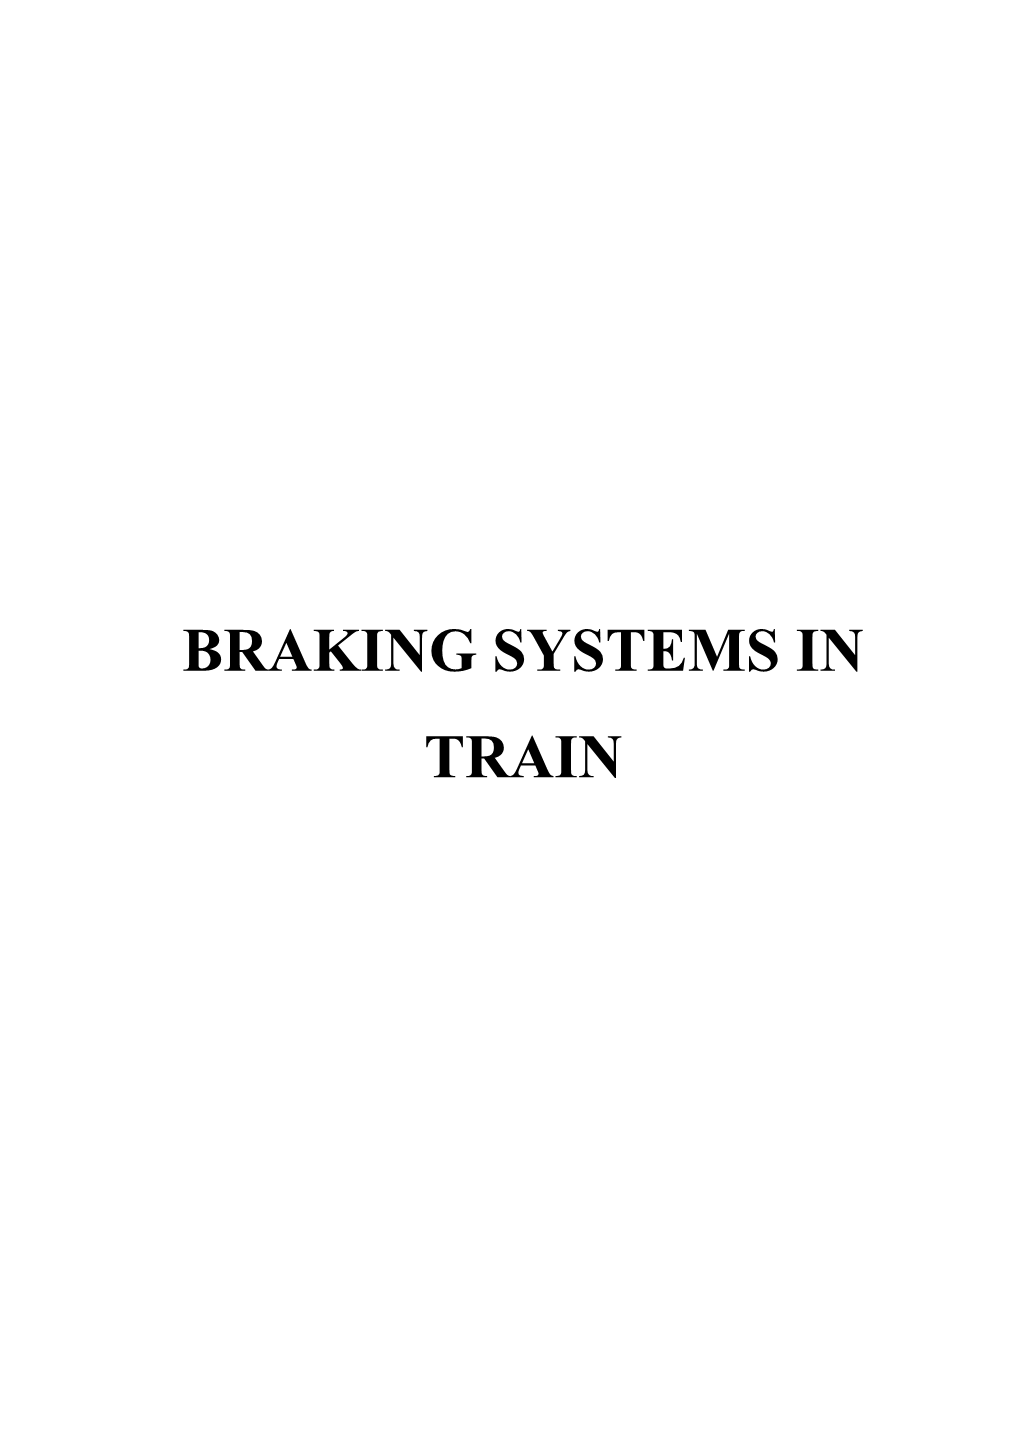 Braking Systems in Train